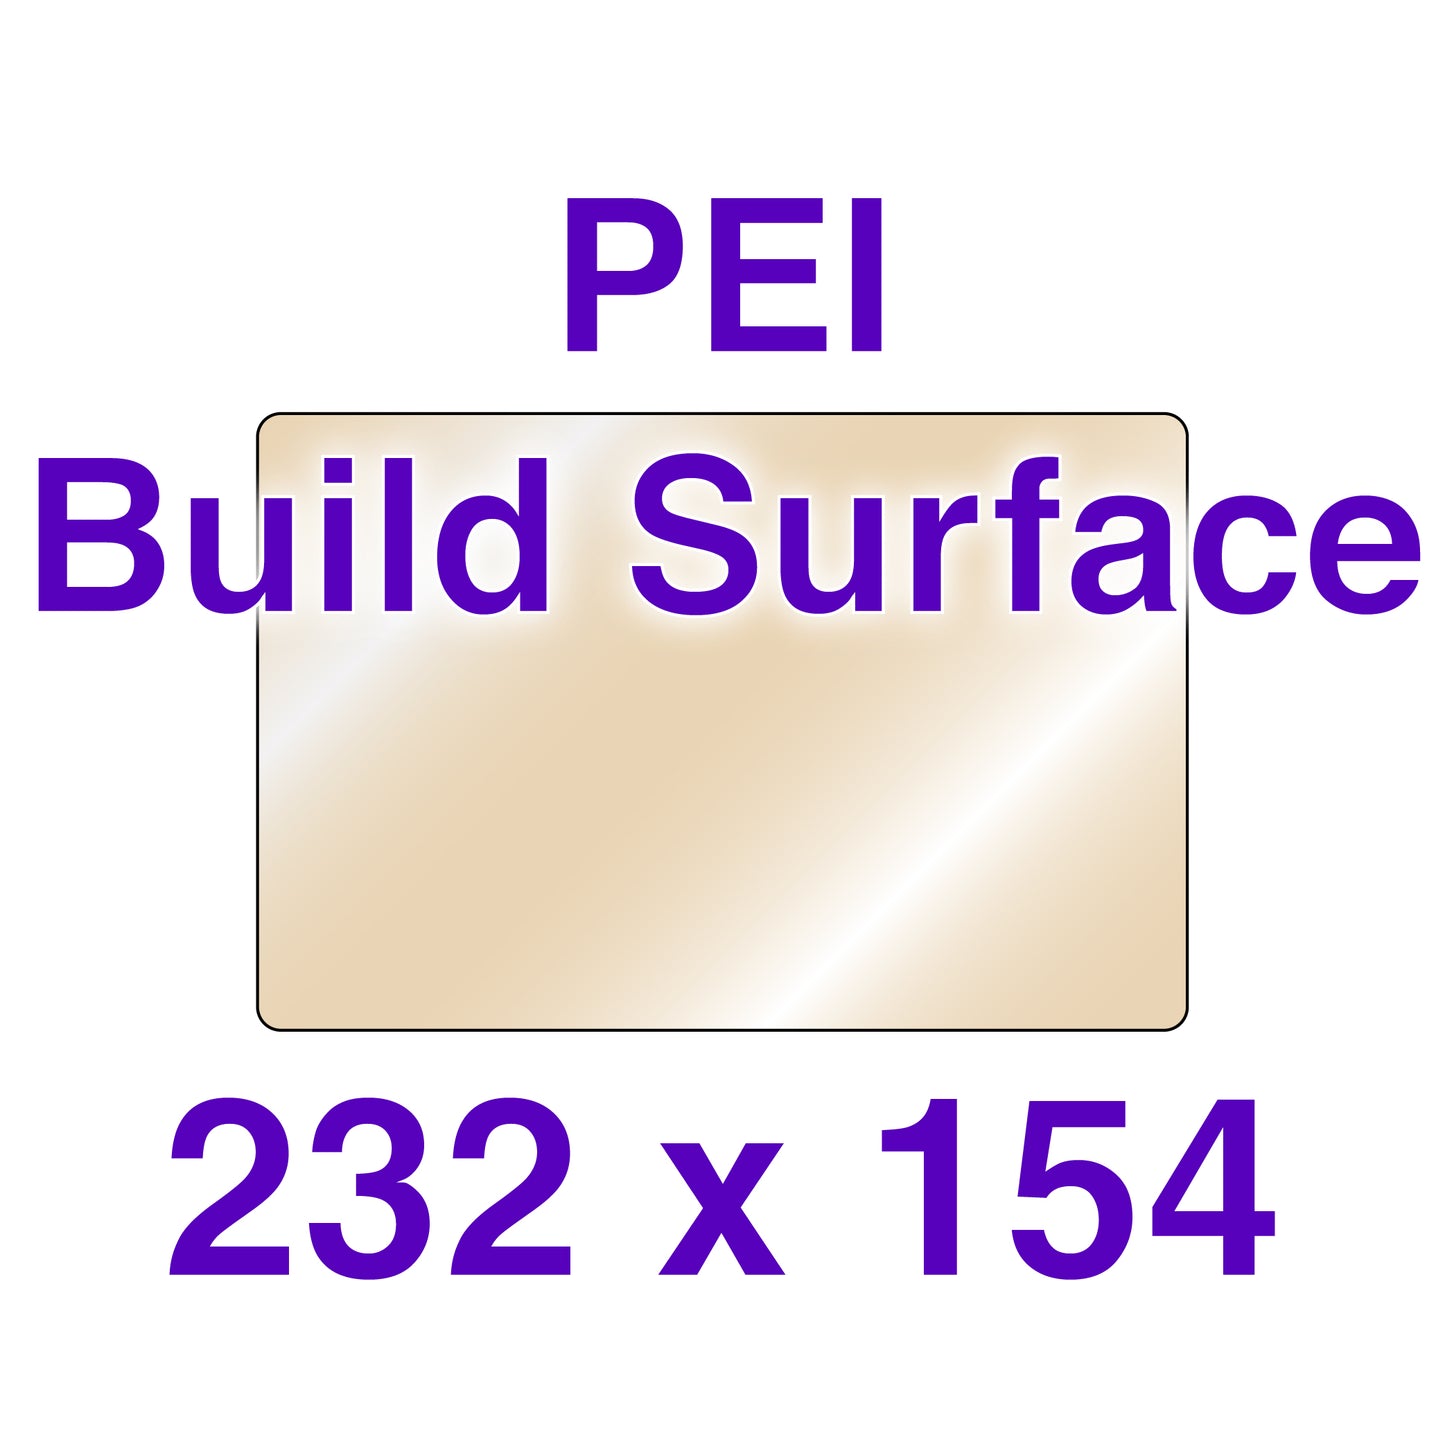 PEI Build Surface - 232 x 154